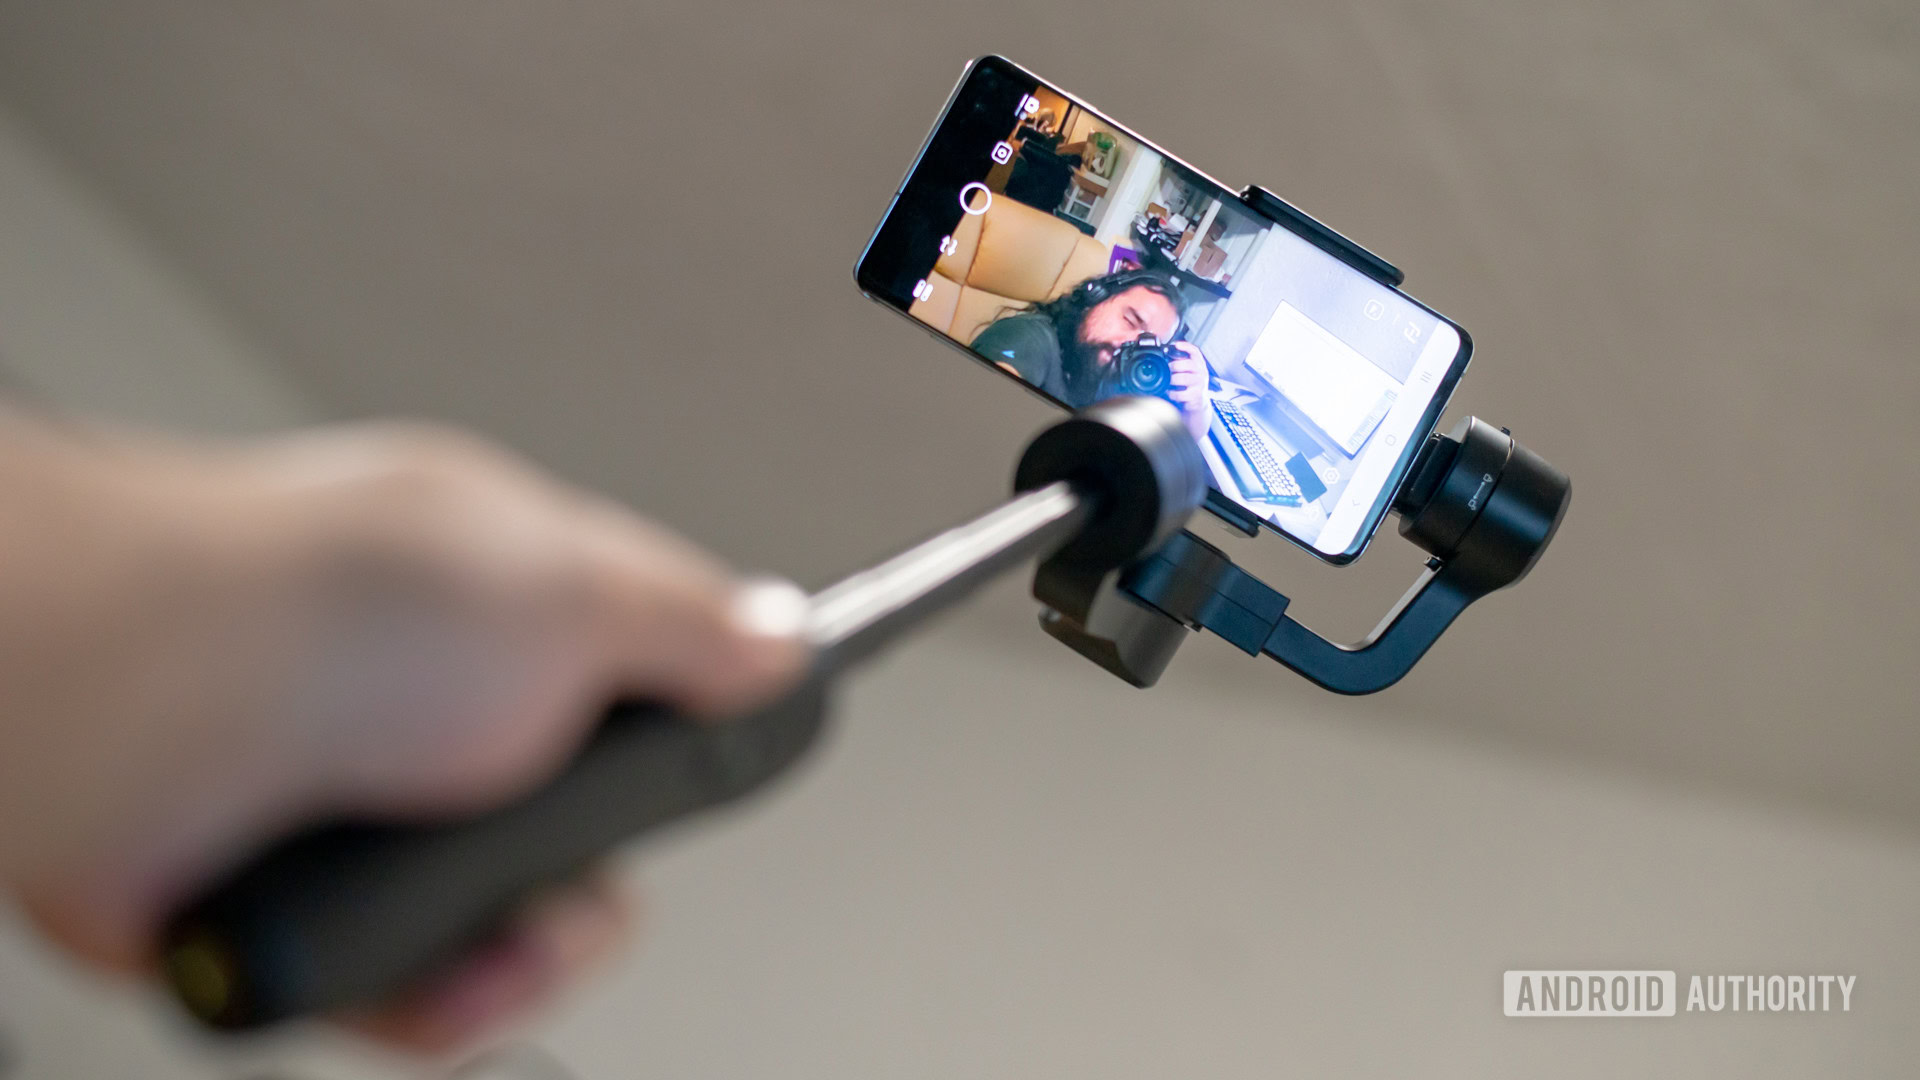 Black Wired Selfie Stick for iPhone 5s SE 6S Plus 7 Plus NEM Battery Free Samsung Galaxy J7 S7 Edge Nexus 6p LG G5 Moto Z Droid Force Alcatel Tru Fierce Idol Dawn Selfie Stick 